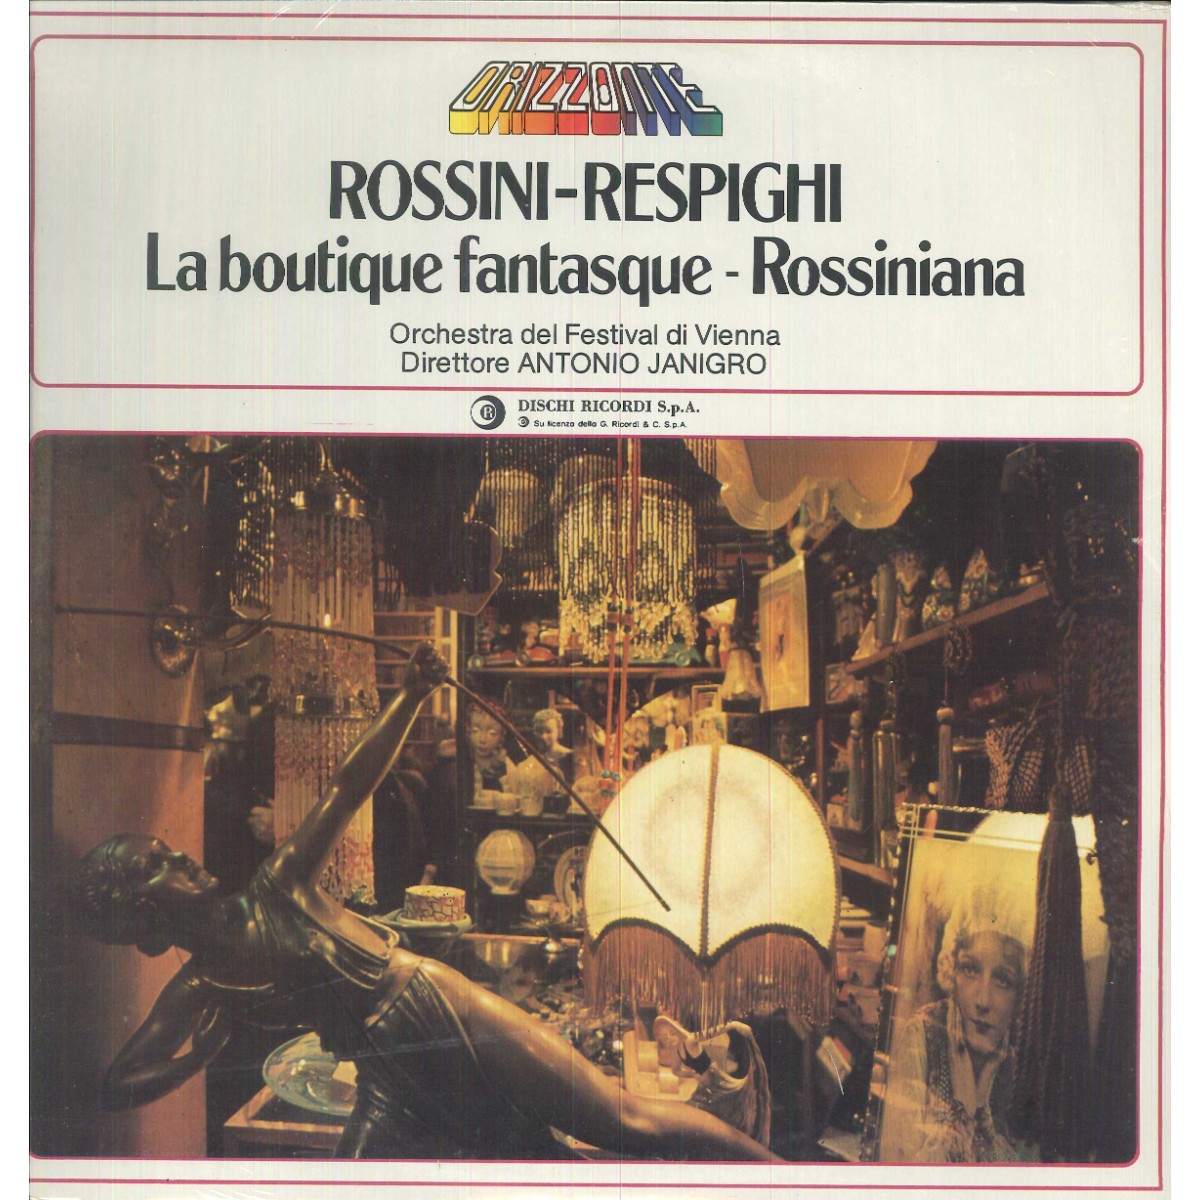 Rossini, Respighi, Janigro LP Vinile La Boutique Fantaque - Rossiniana